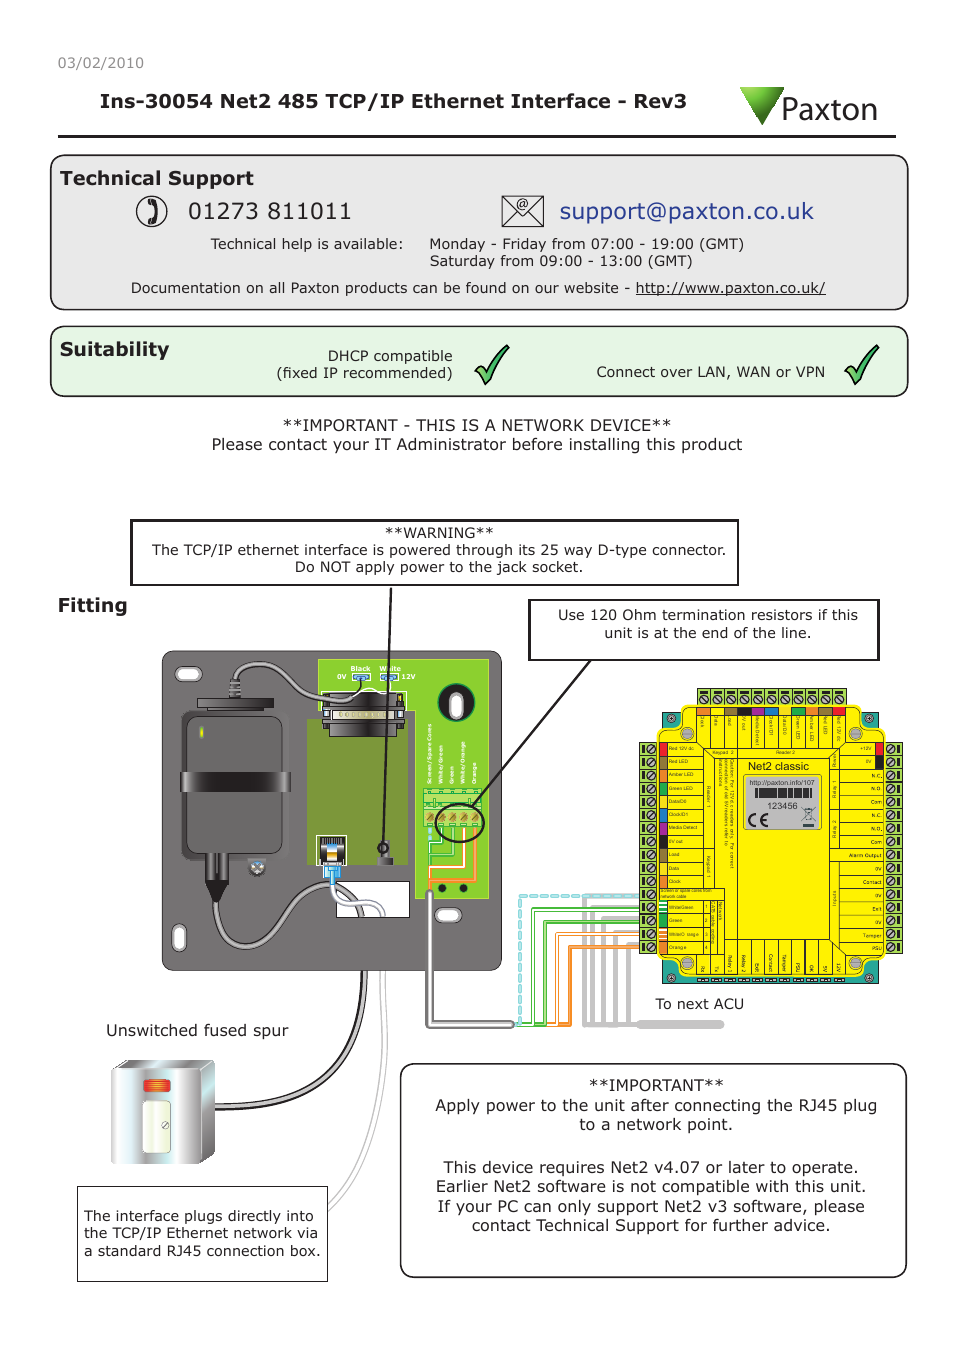 Net2 485 TCP/IP Ethernet Interface - Rev3